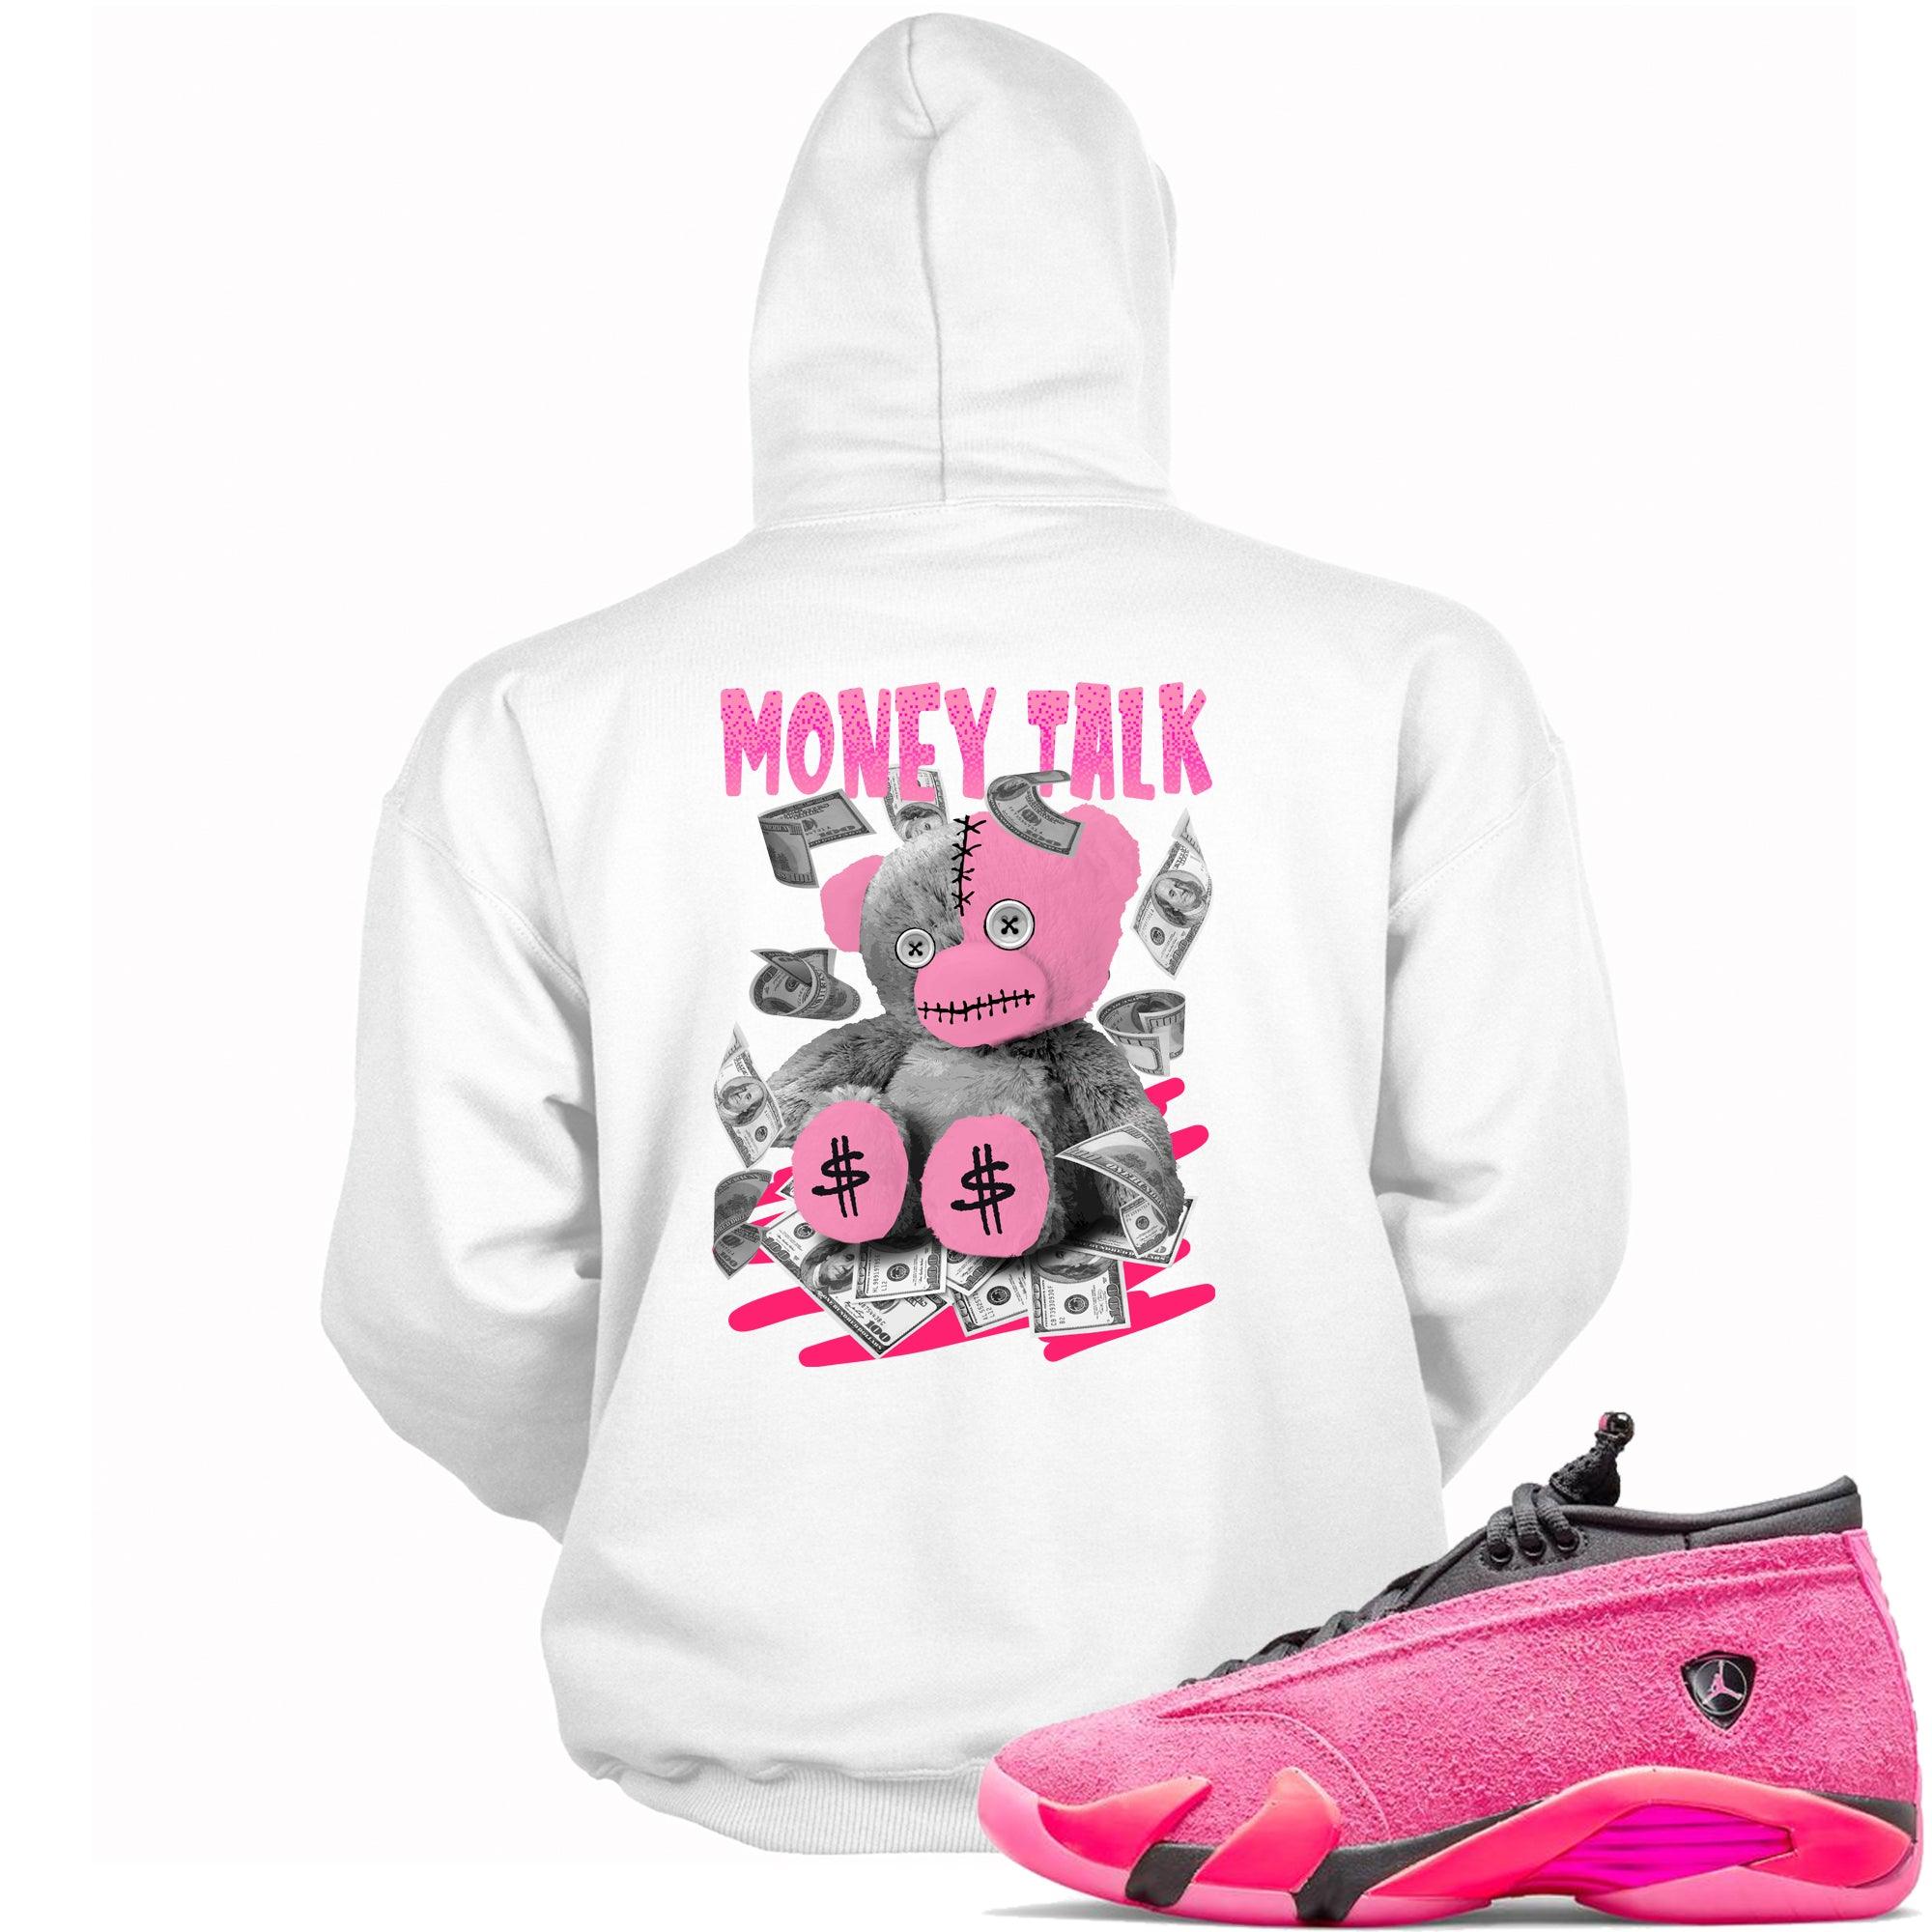 Money Talk Bear Hoodie AJ 14s Low Shocking Pink photo